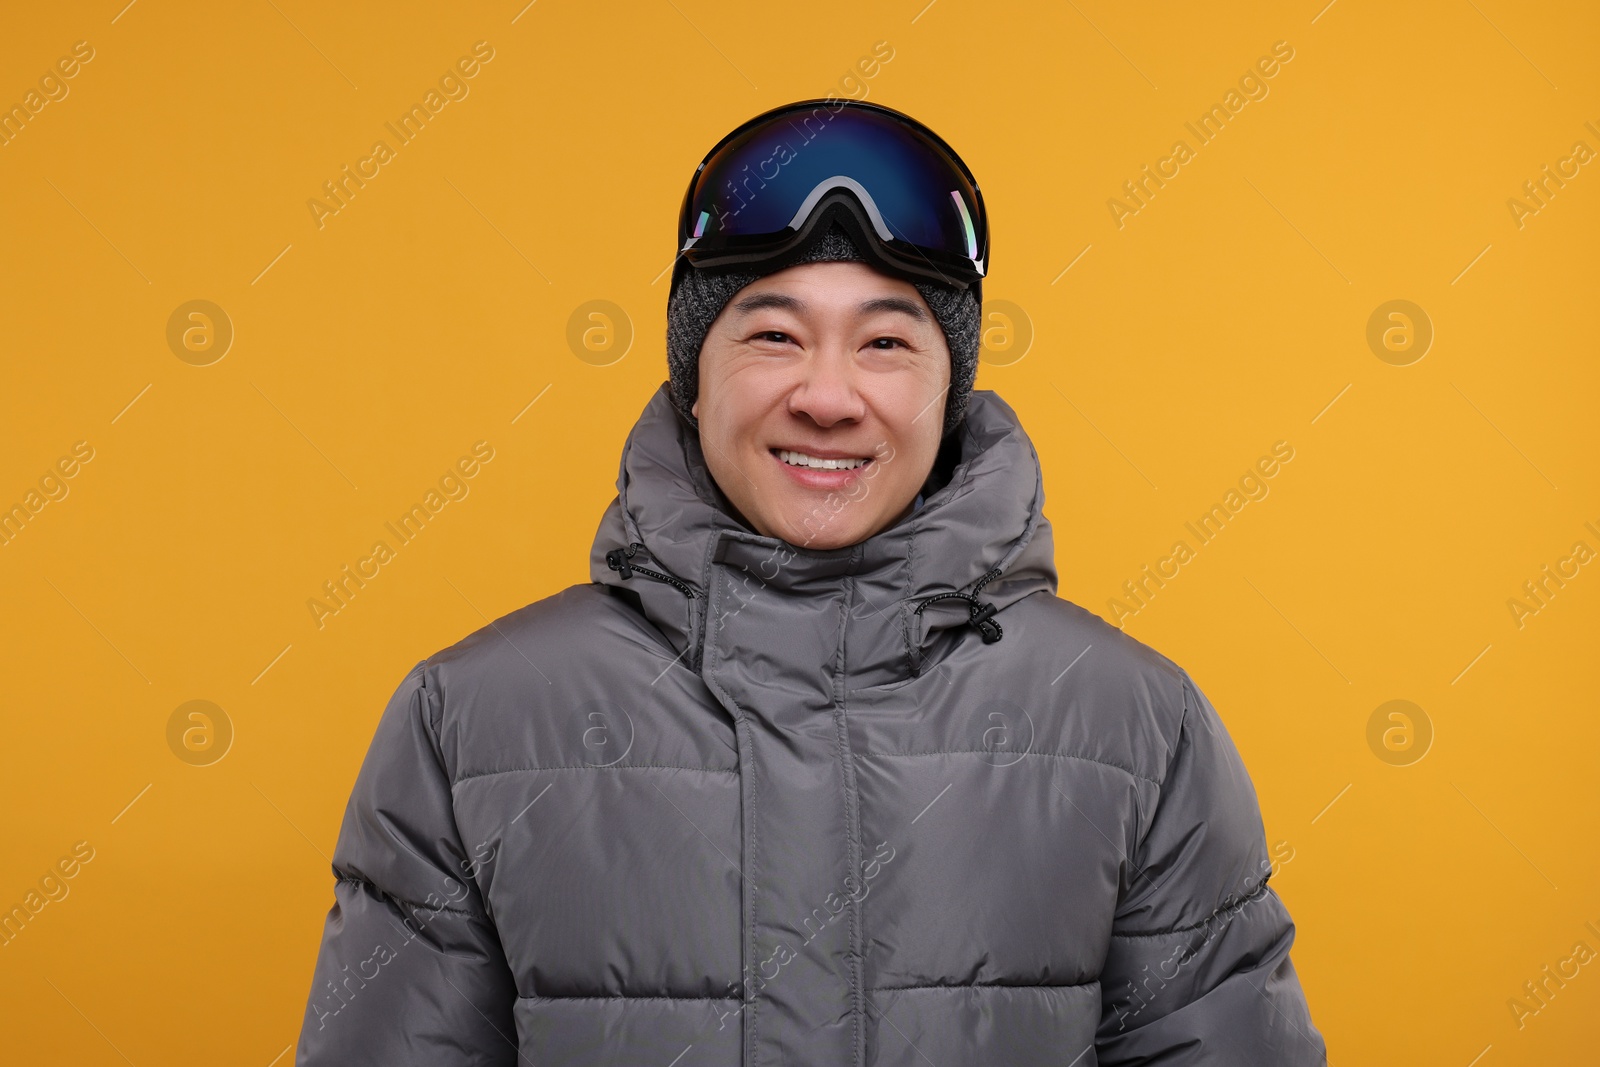 Photo of Winter sports. Happy man with ski goggles on orange background